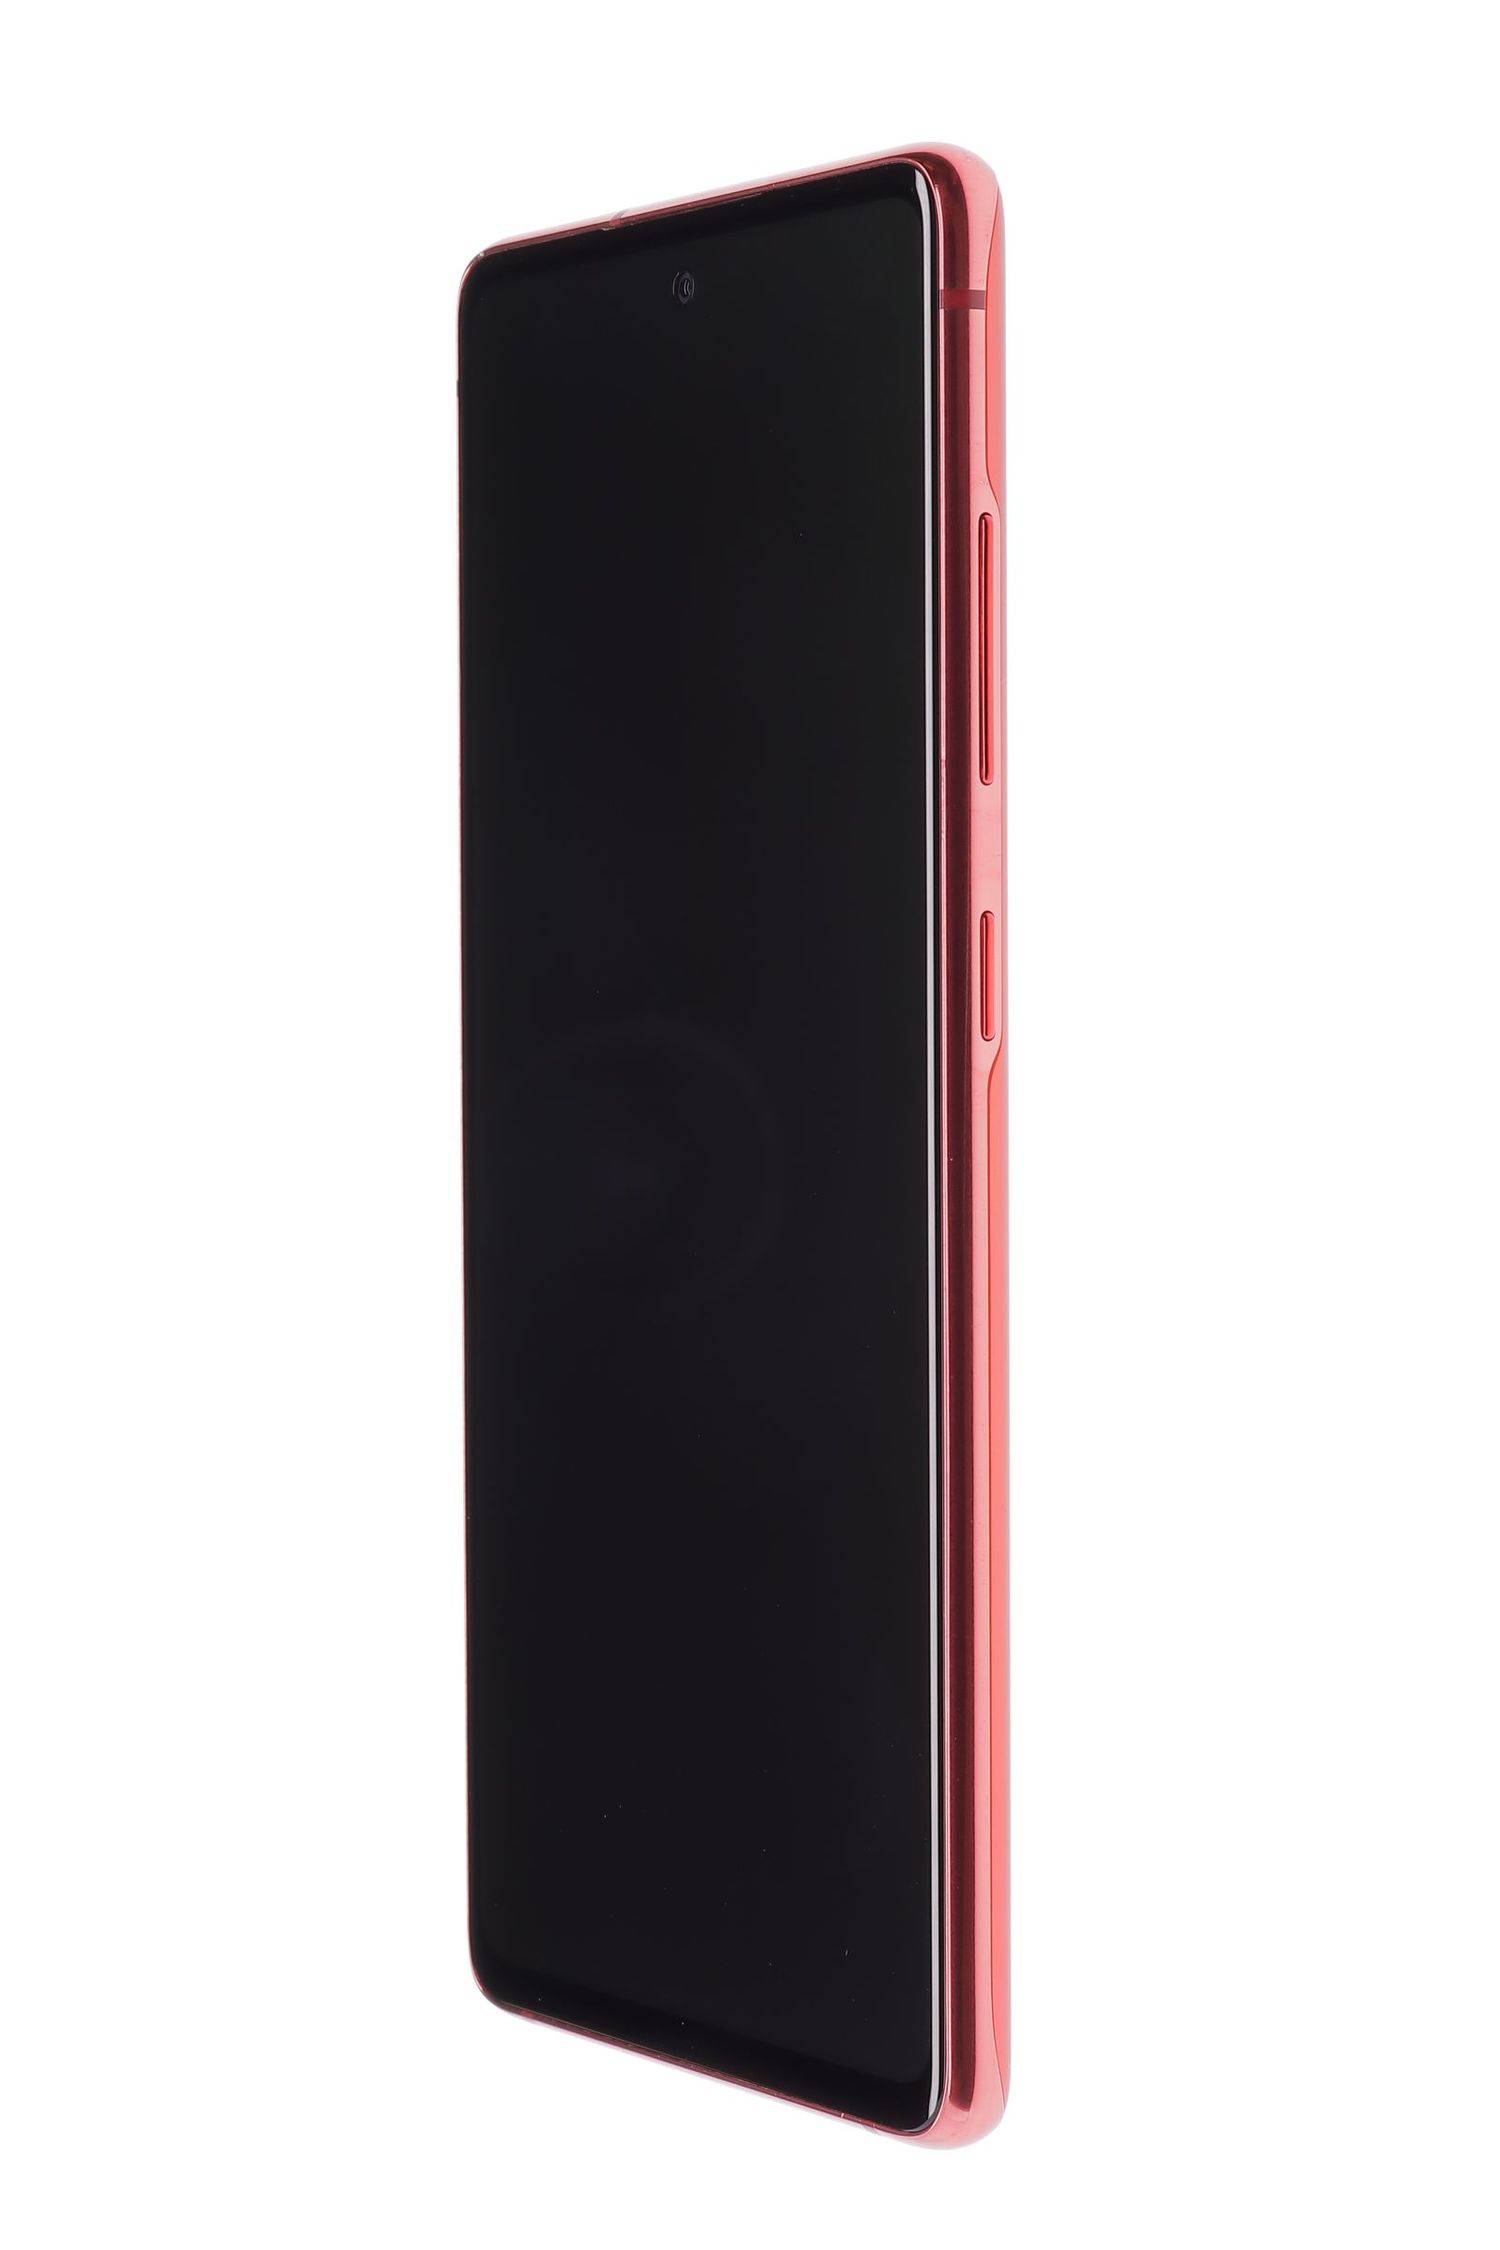 Mobiltelefon Samsung Galaxy S20 FE Dual Sim, Cloud Red, 128 GB, Excelent